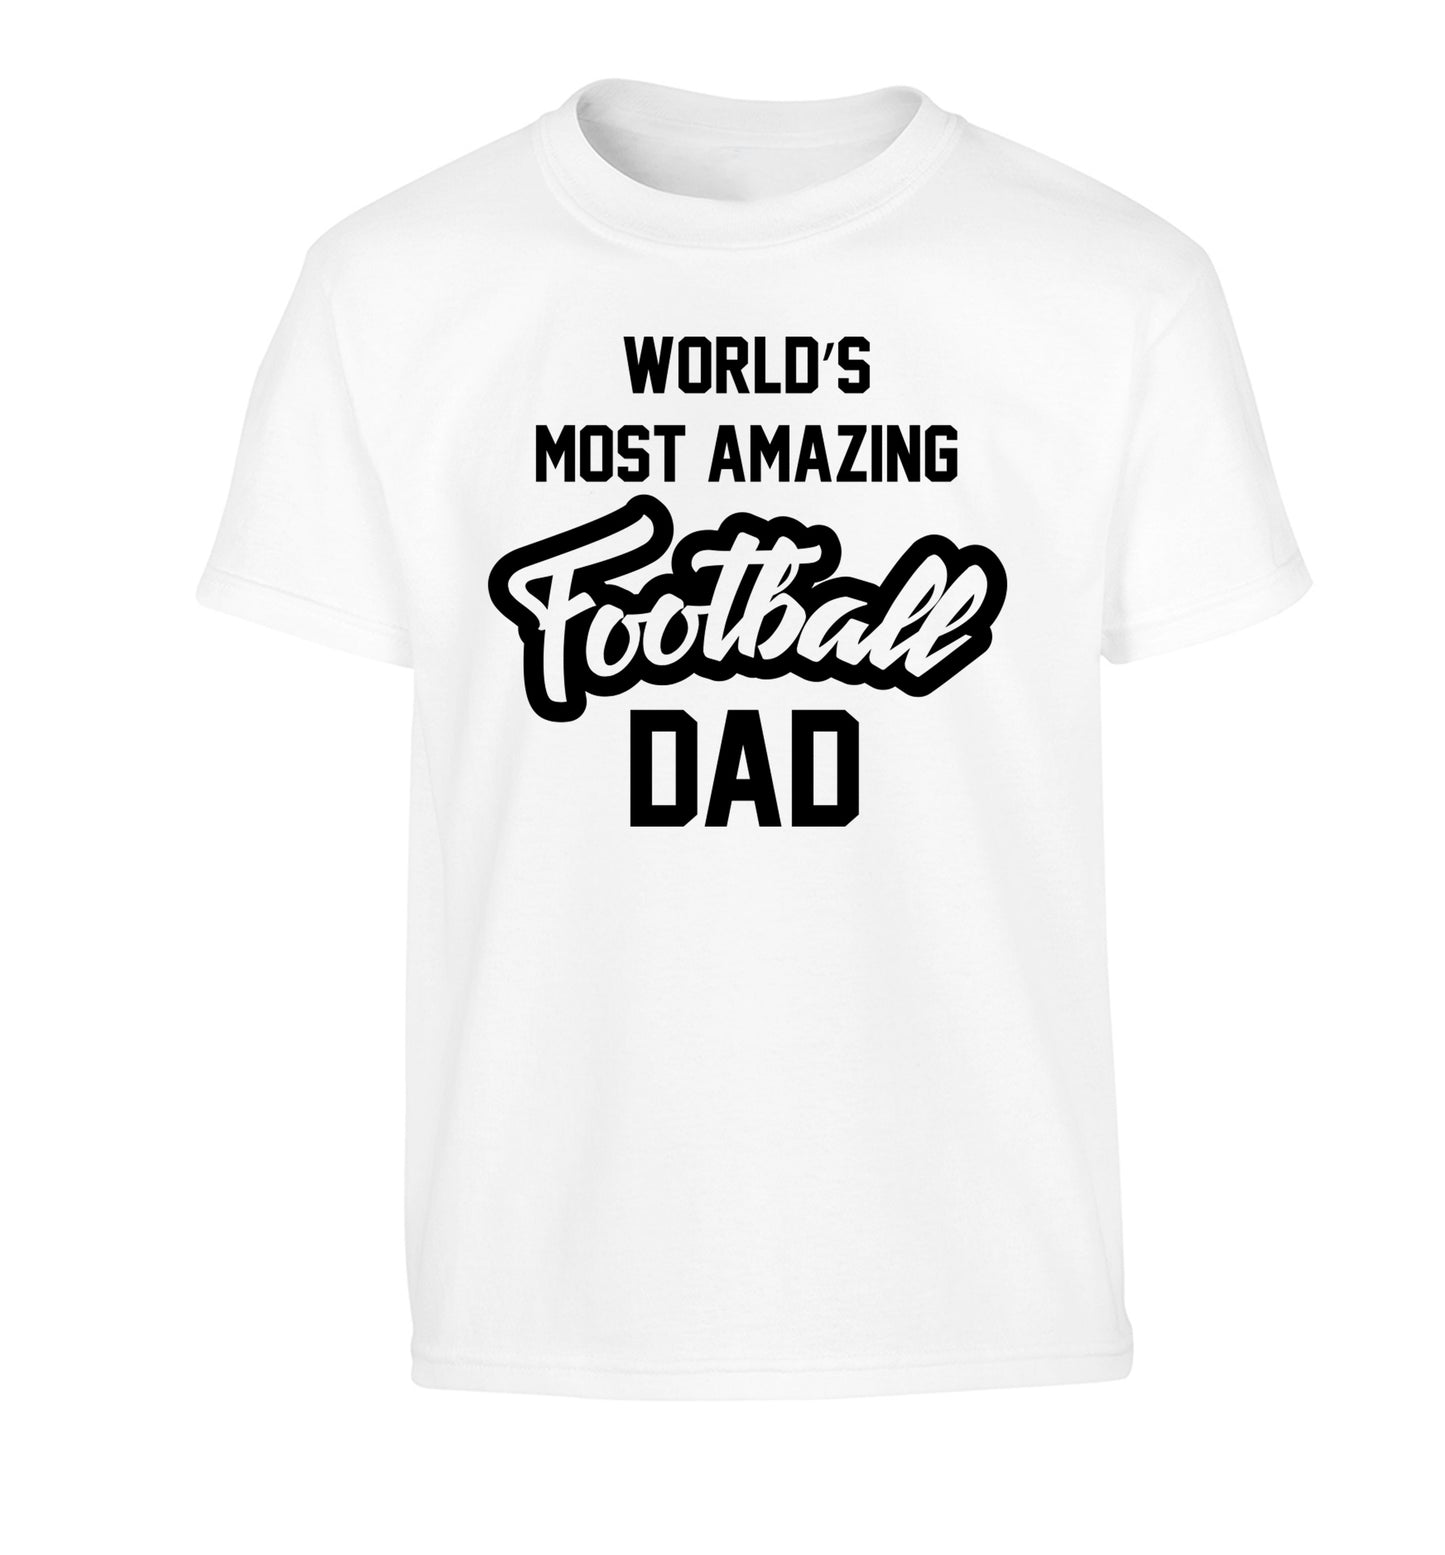 Worlds most amazing football dad Children's white Tshirt 12-14 Years